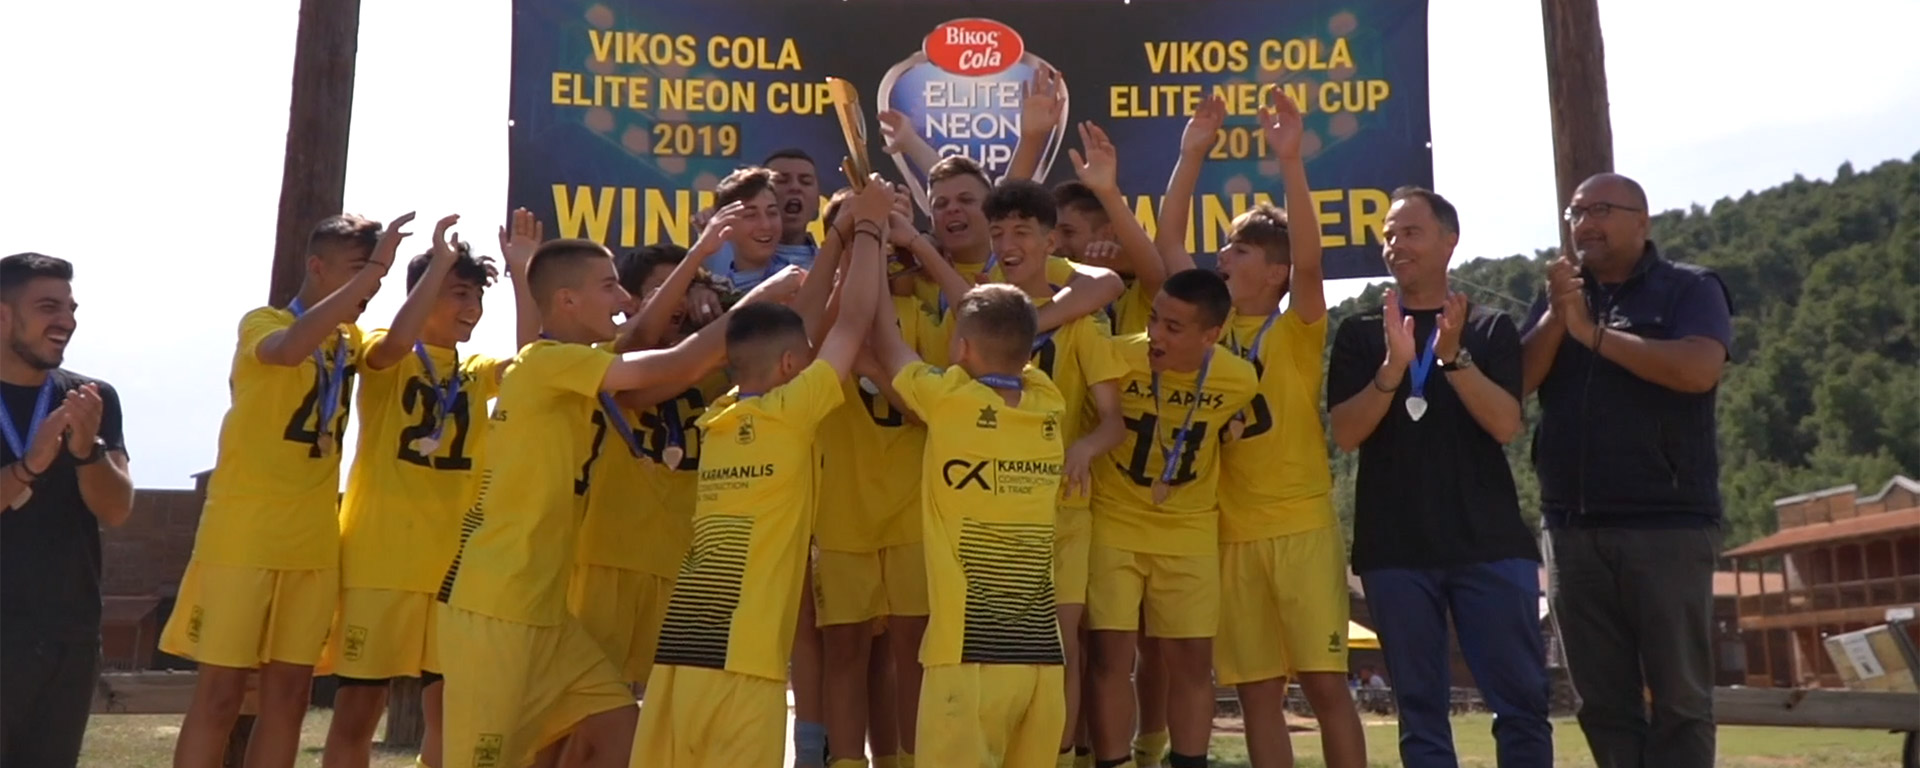 Vikos Cola Elite Neon Cup 2019 Corinth Edition